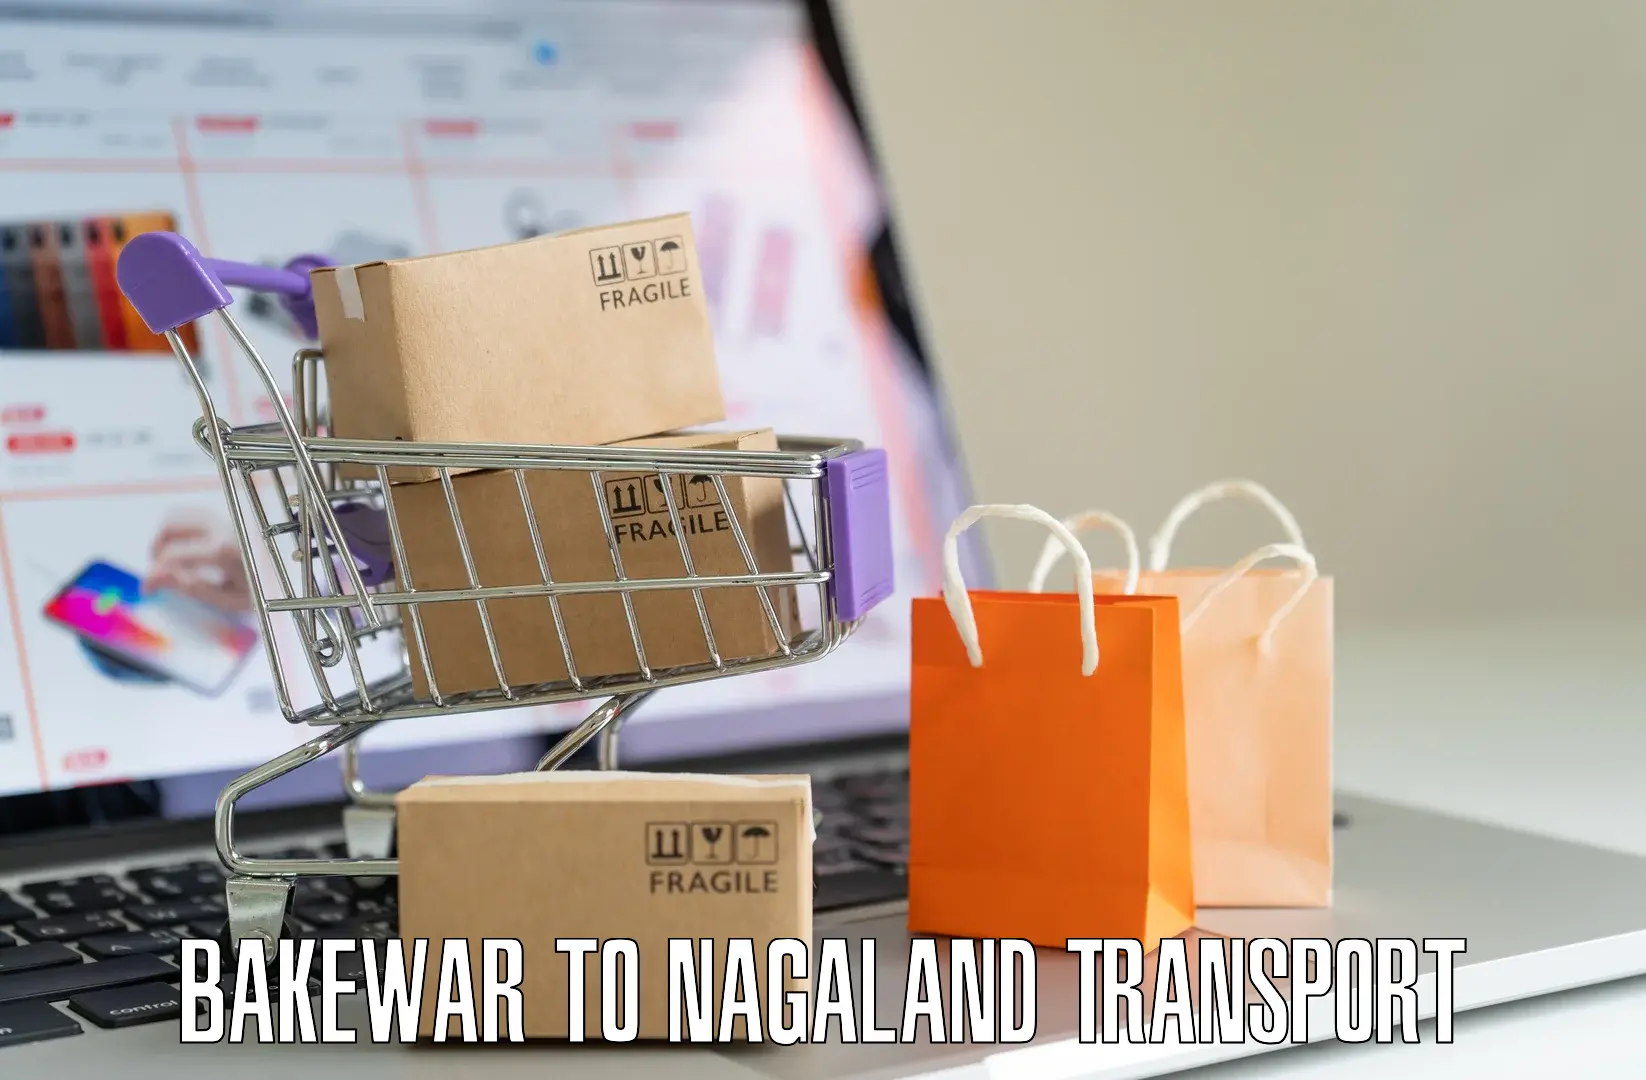 Daily transport service Bakewar to Nagaland